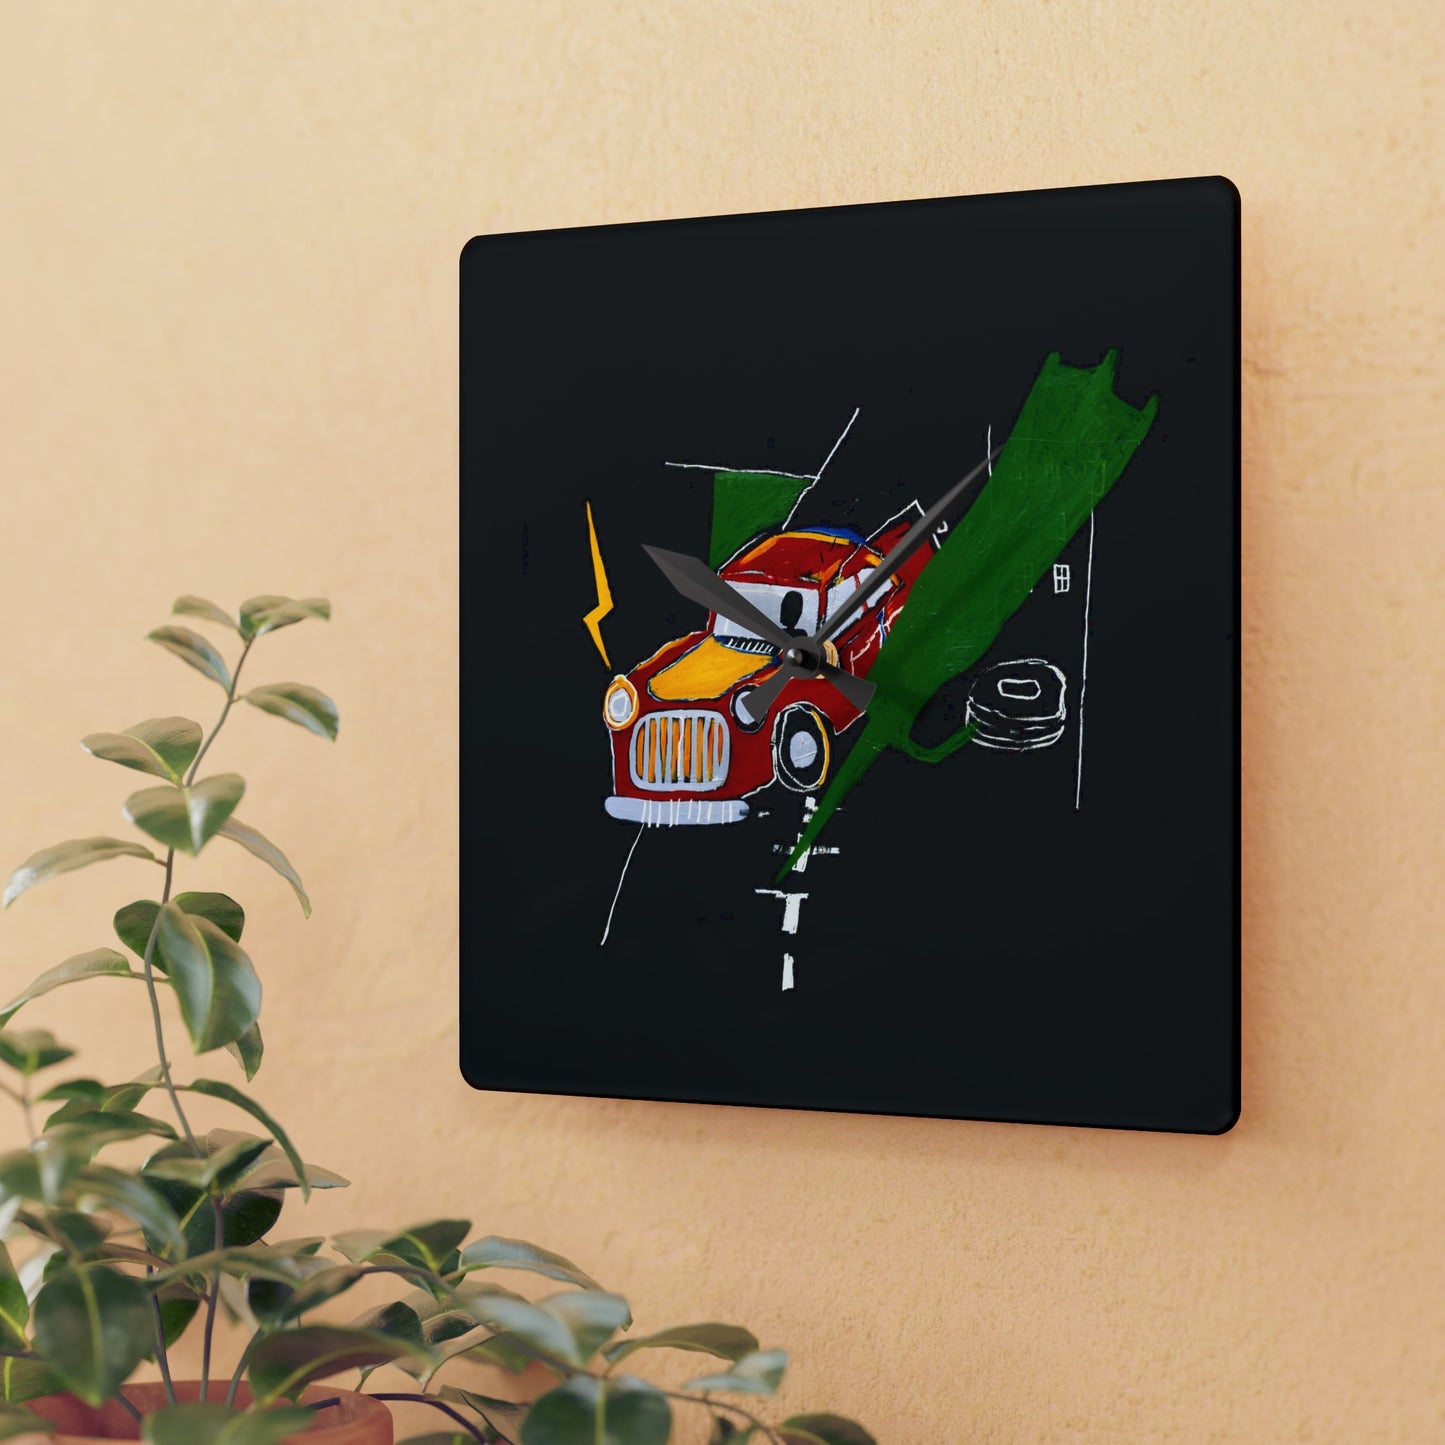 Jean-Michel Basquiat "Untitled" Artwork Acrylic Wall Clock